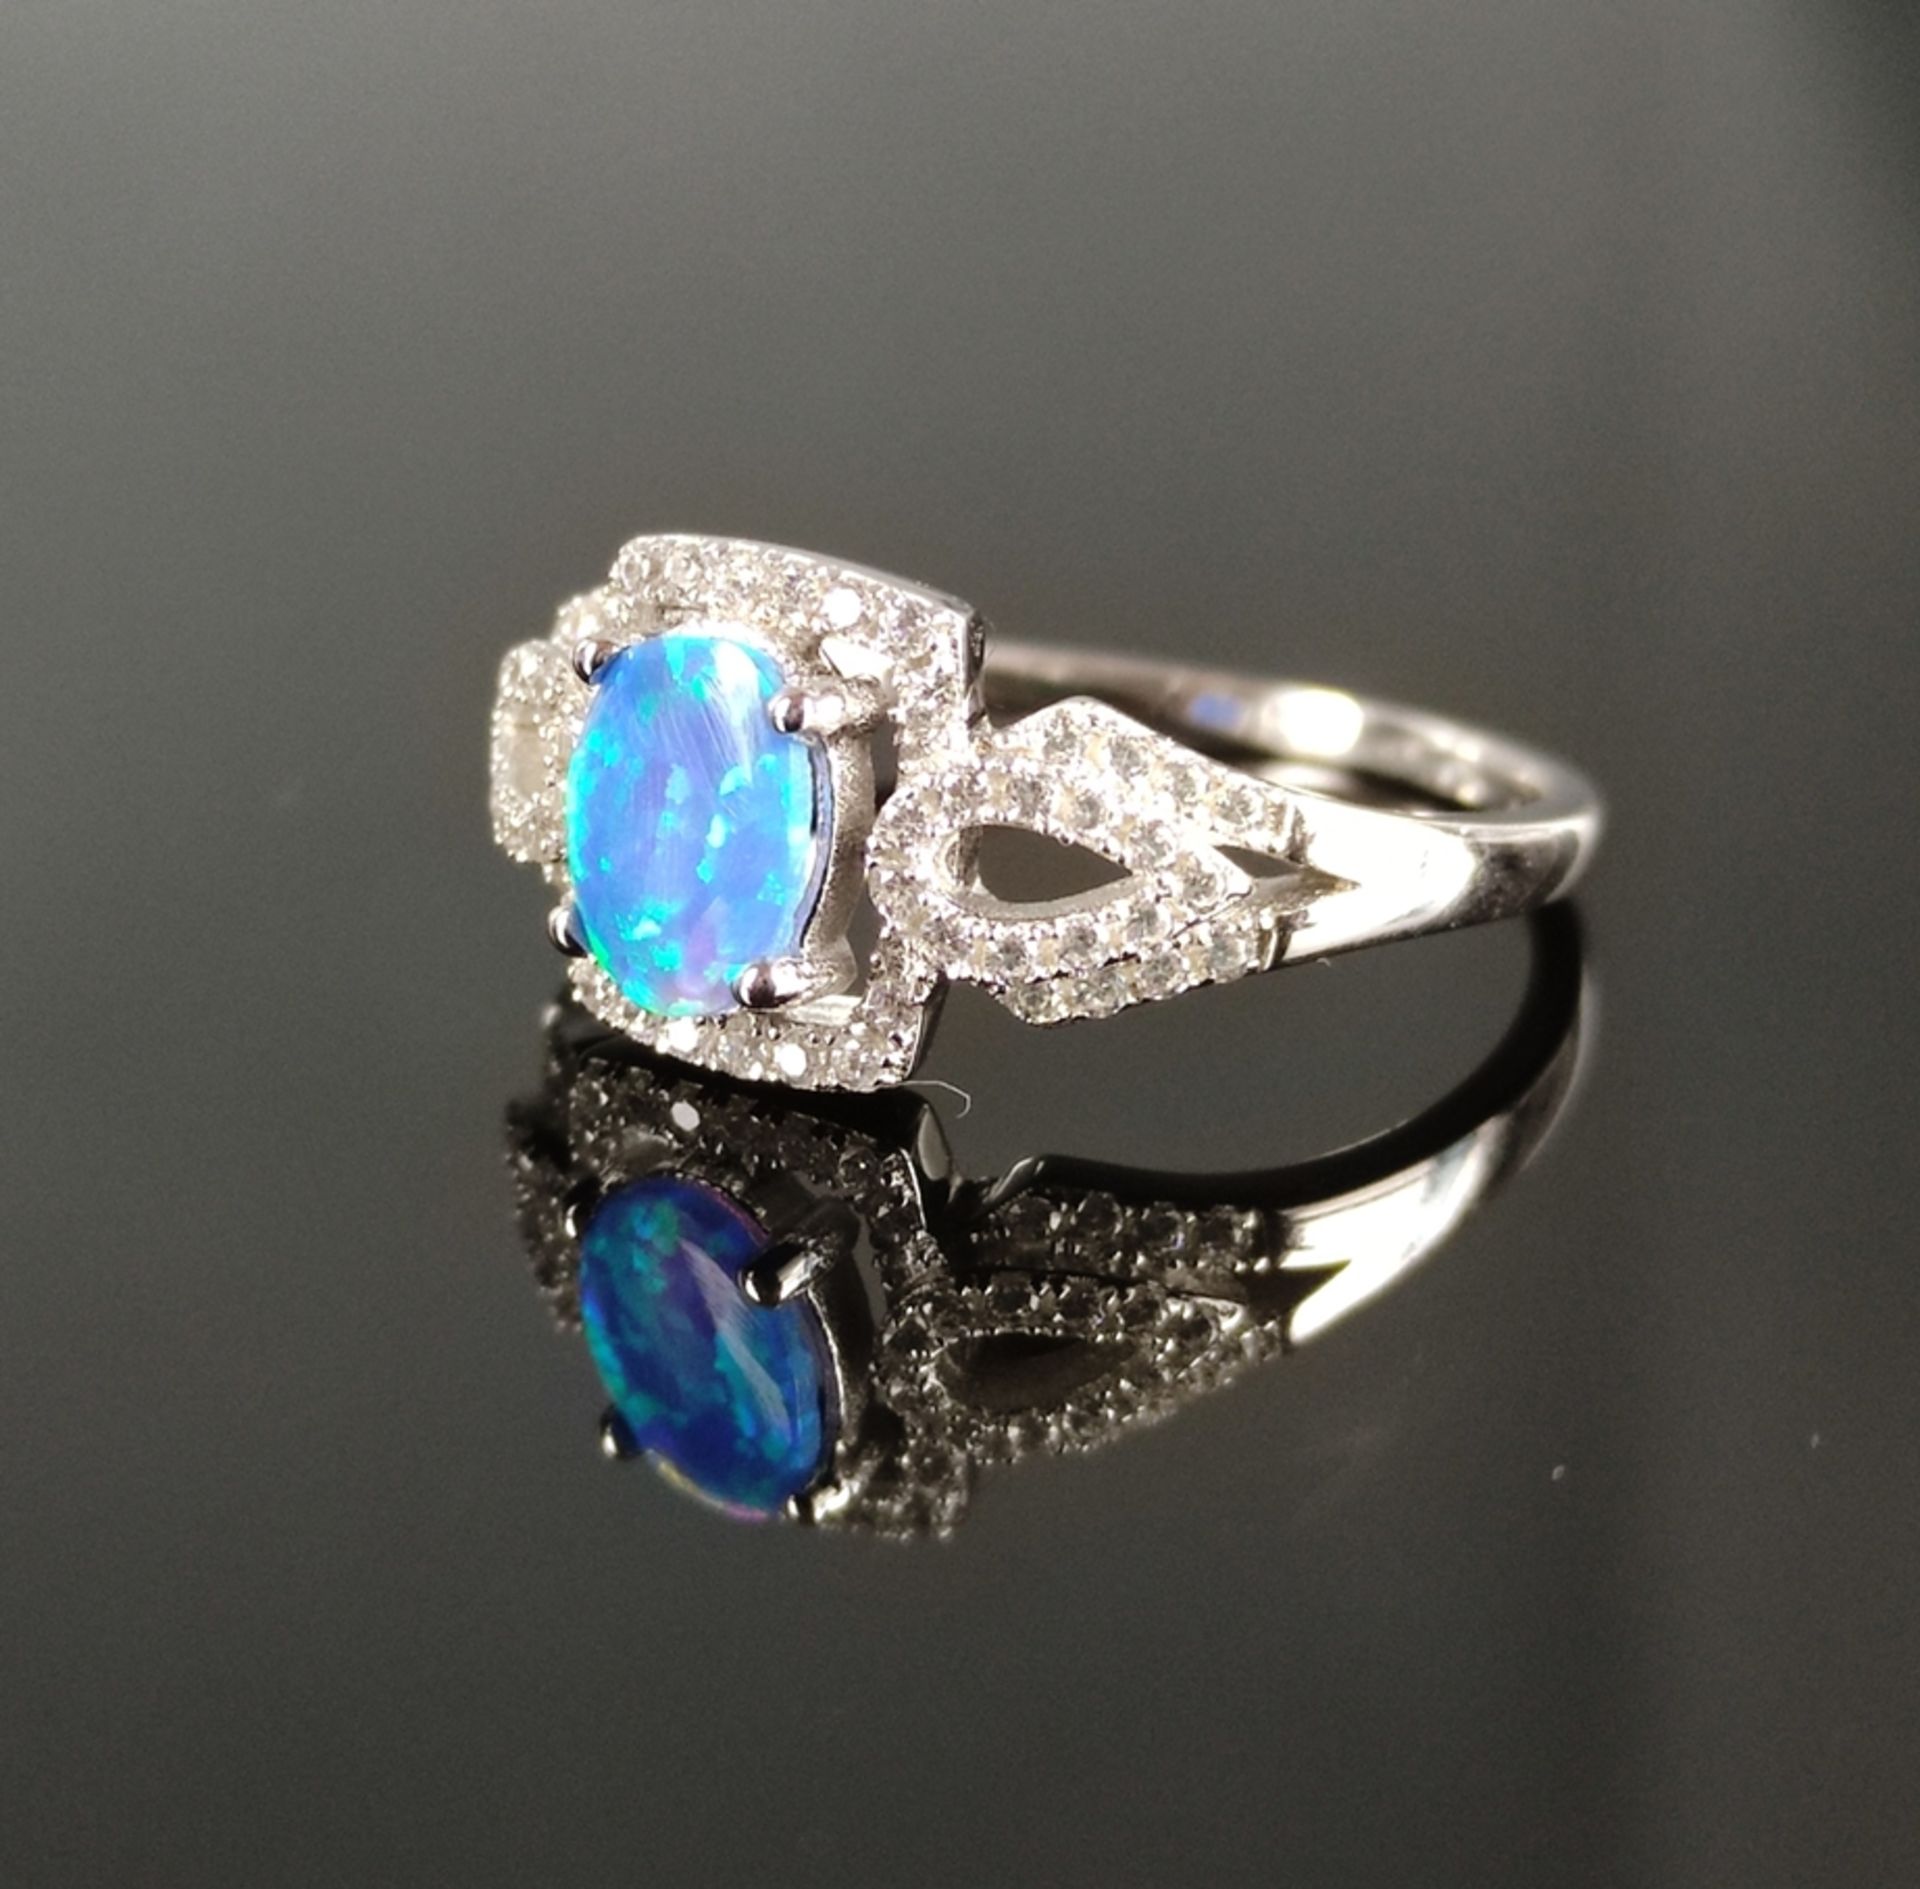 Opal-Ring, Silber 925, Ring-Kopf besetzt mit einem rechteckigen Gilson Opal in blau-grünem Farbensp